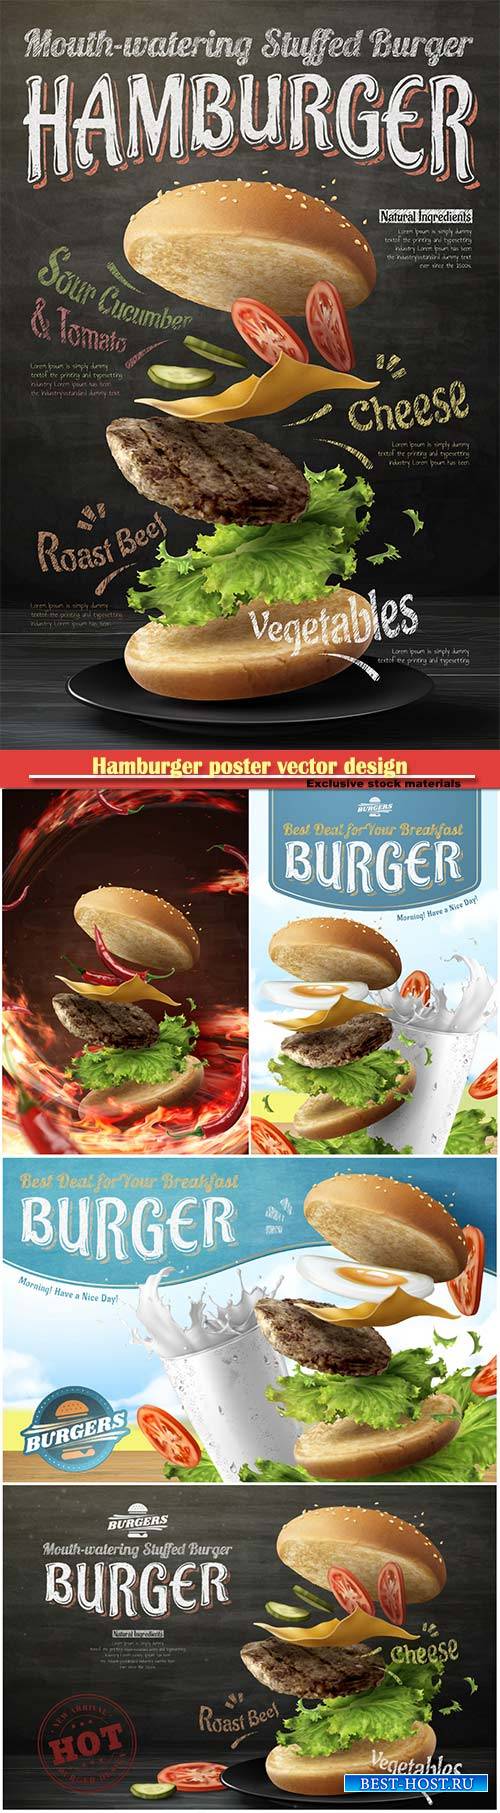 Hamburger poster vector design